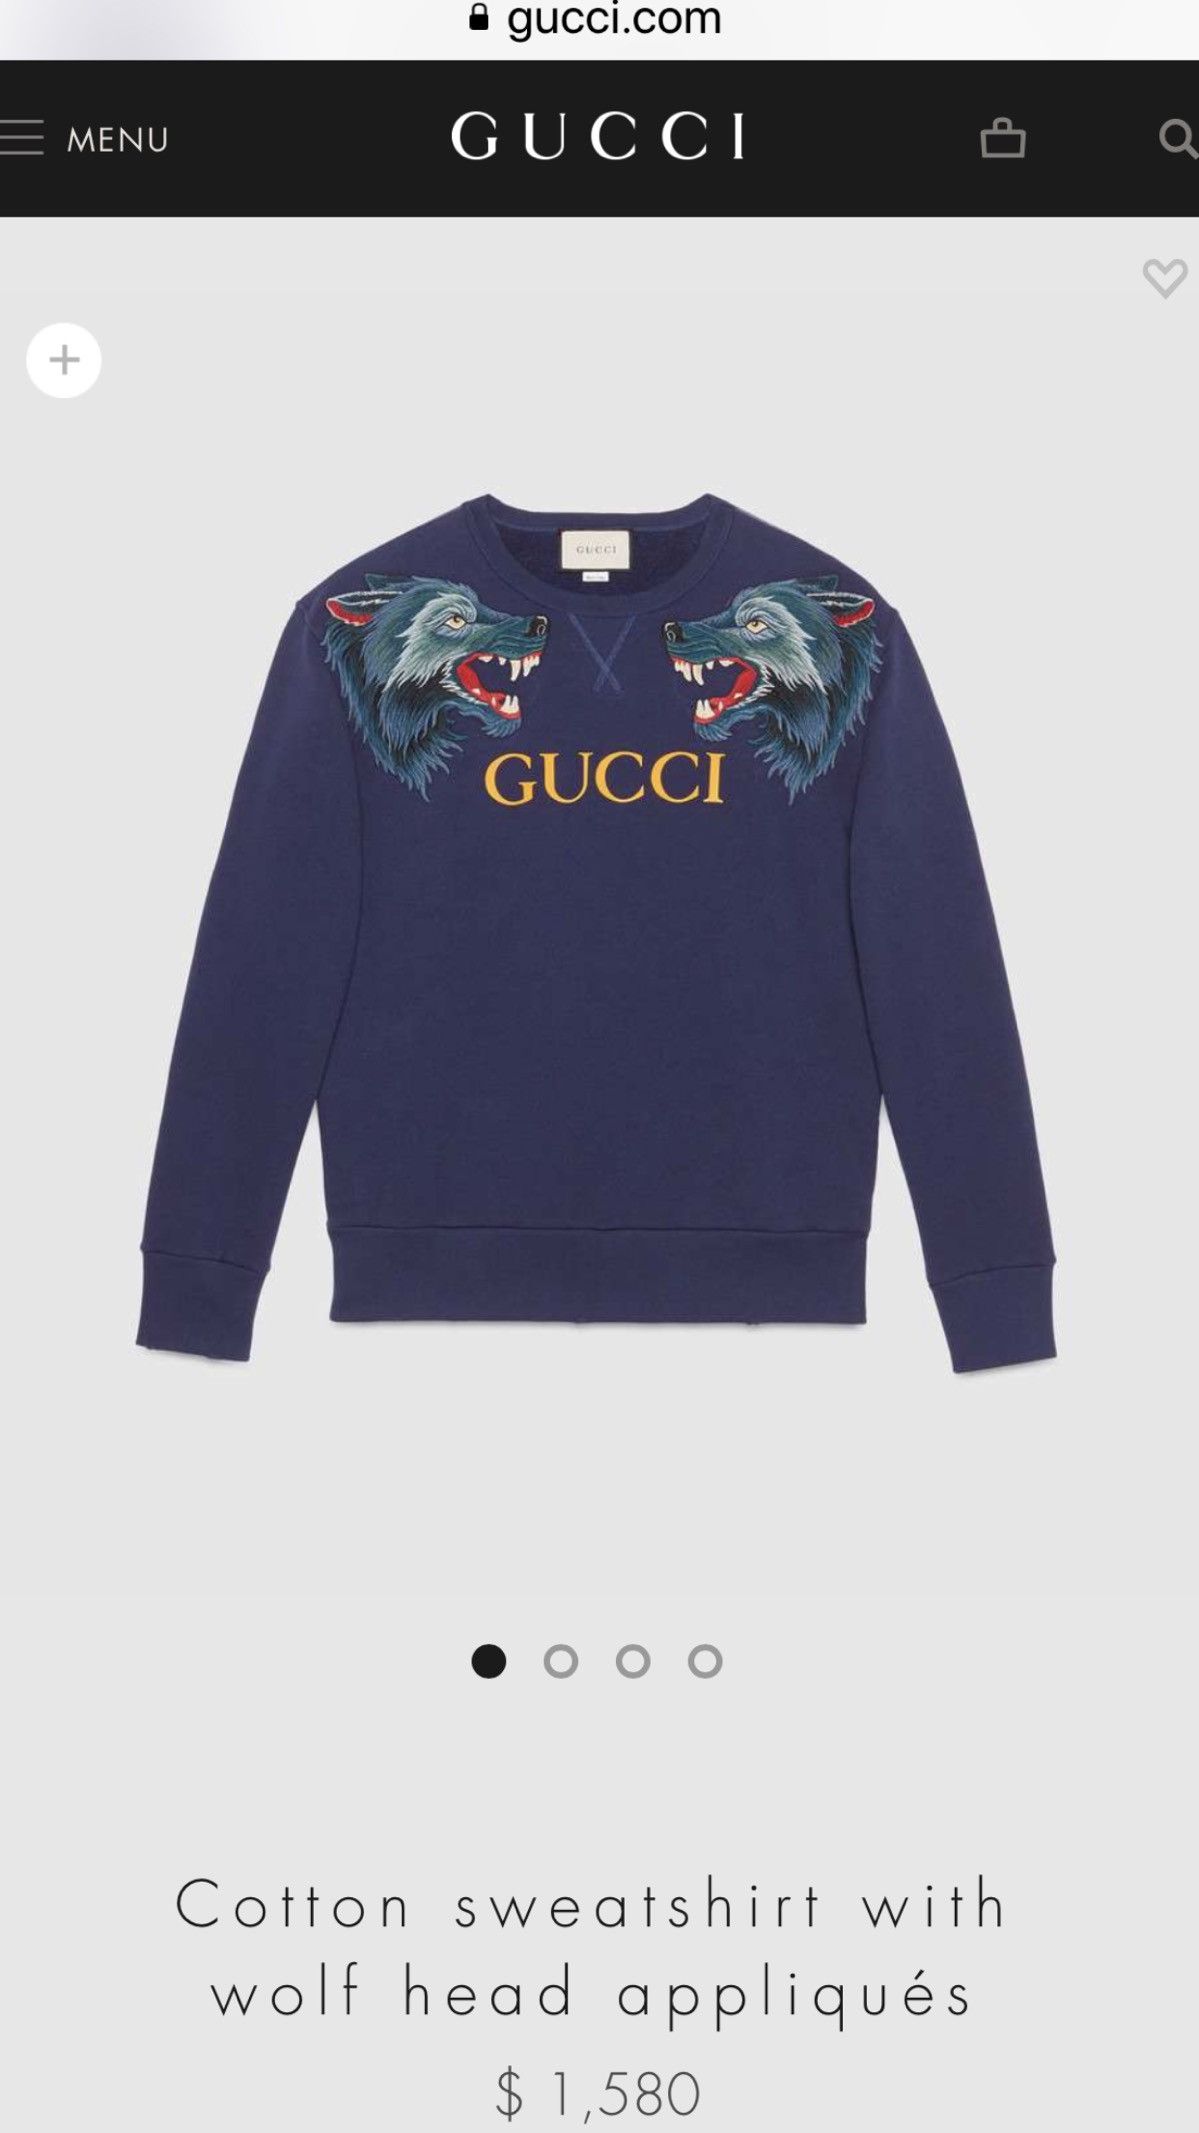 Gucci sweatshirt | Grailed